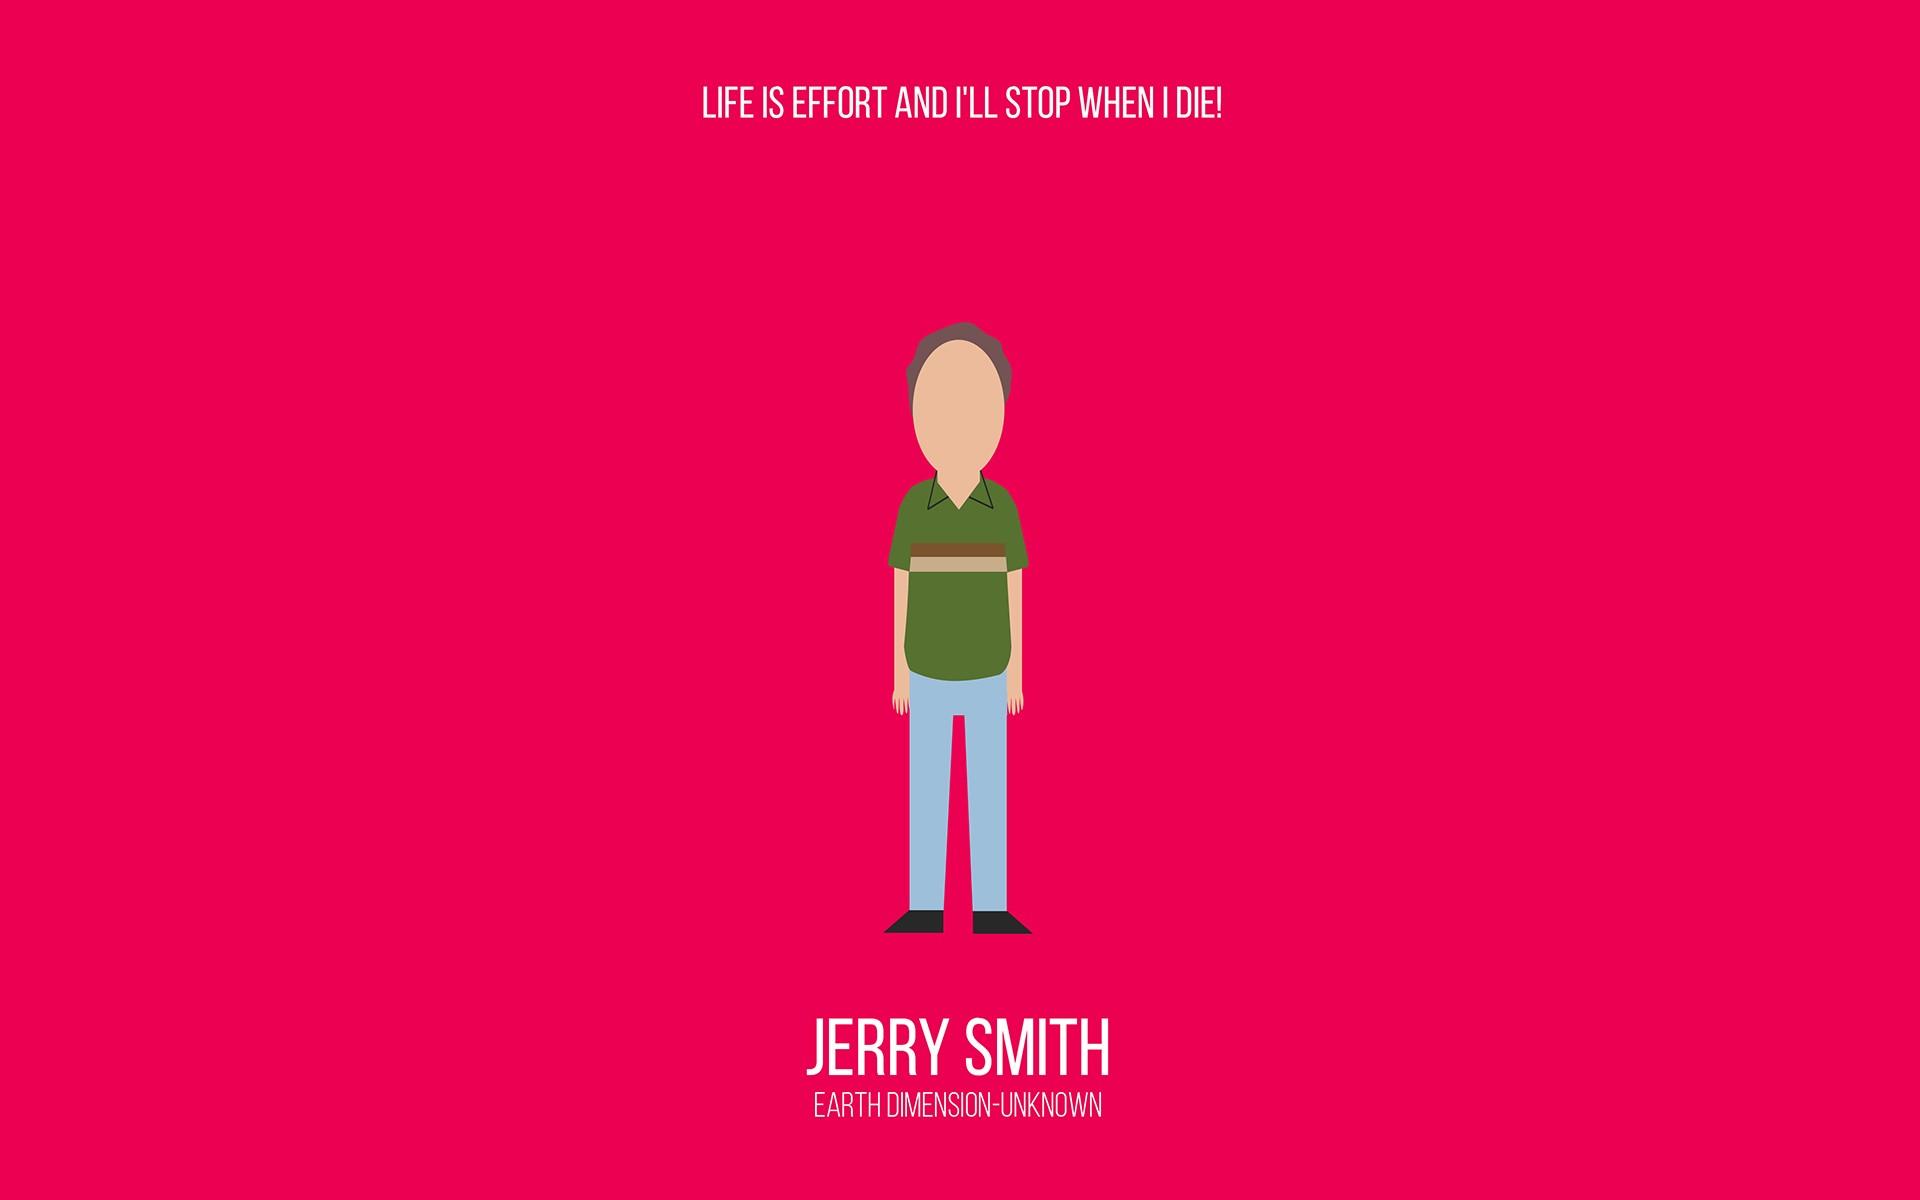 #Jerry Smith, #minimalism, #Rick and Morty, #cartoon